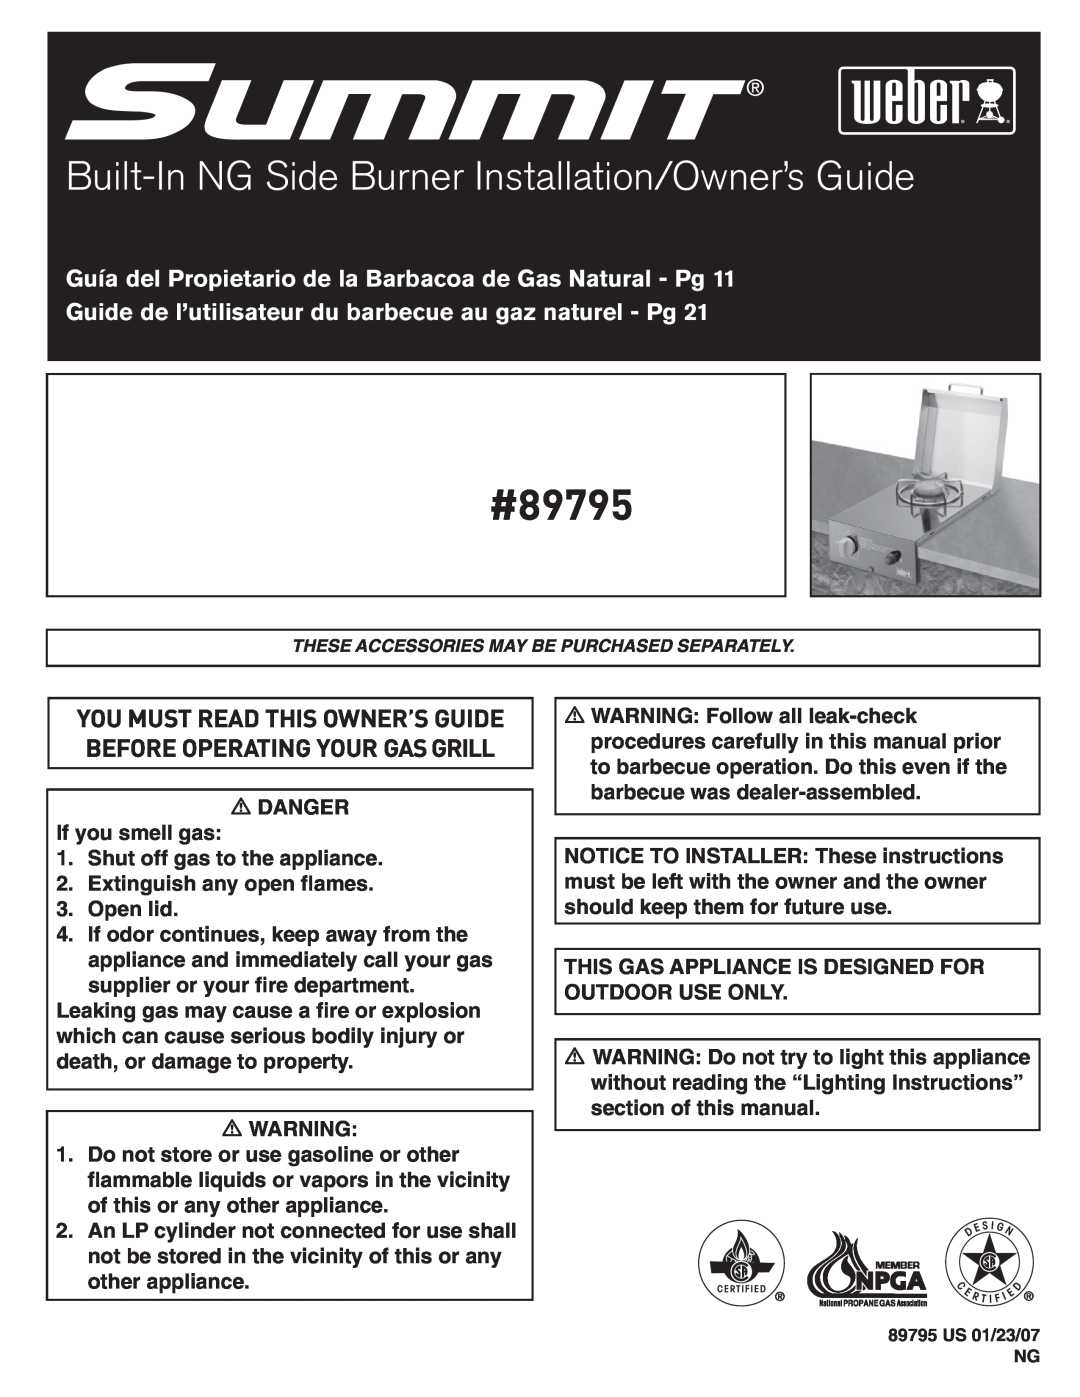 Summit manual #89795, Built-InNG Side Burner Installation/Owner’s Guide 